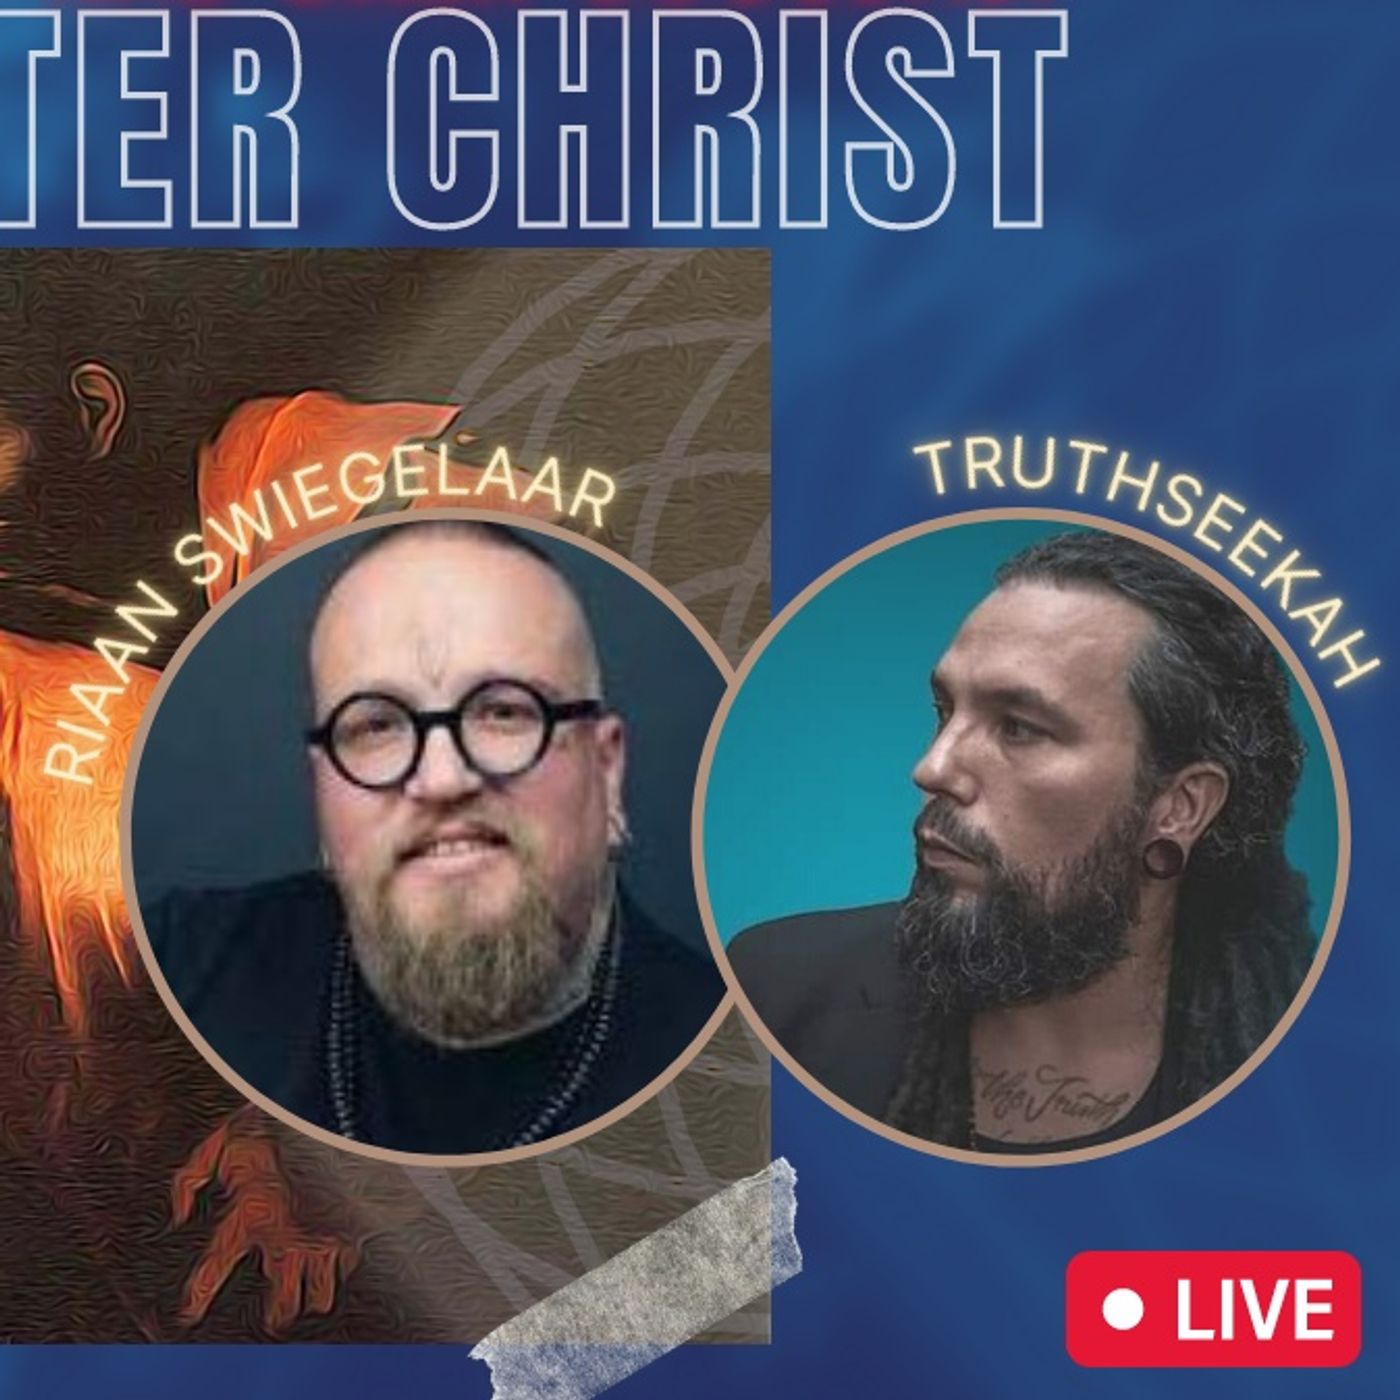 Riaan Swiegelaar and TruthSeekah - From Satanism, Dark Magick To Christ - The Holy Spirit Is Moving!